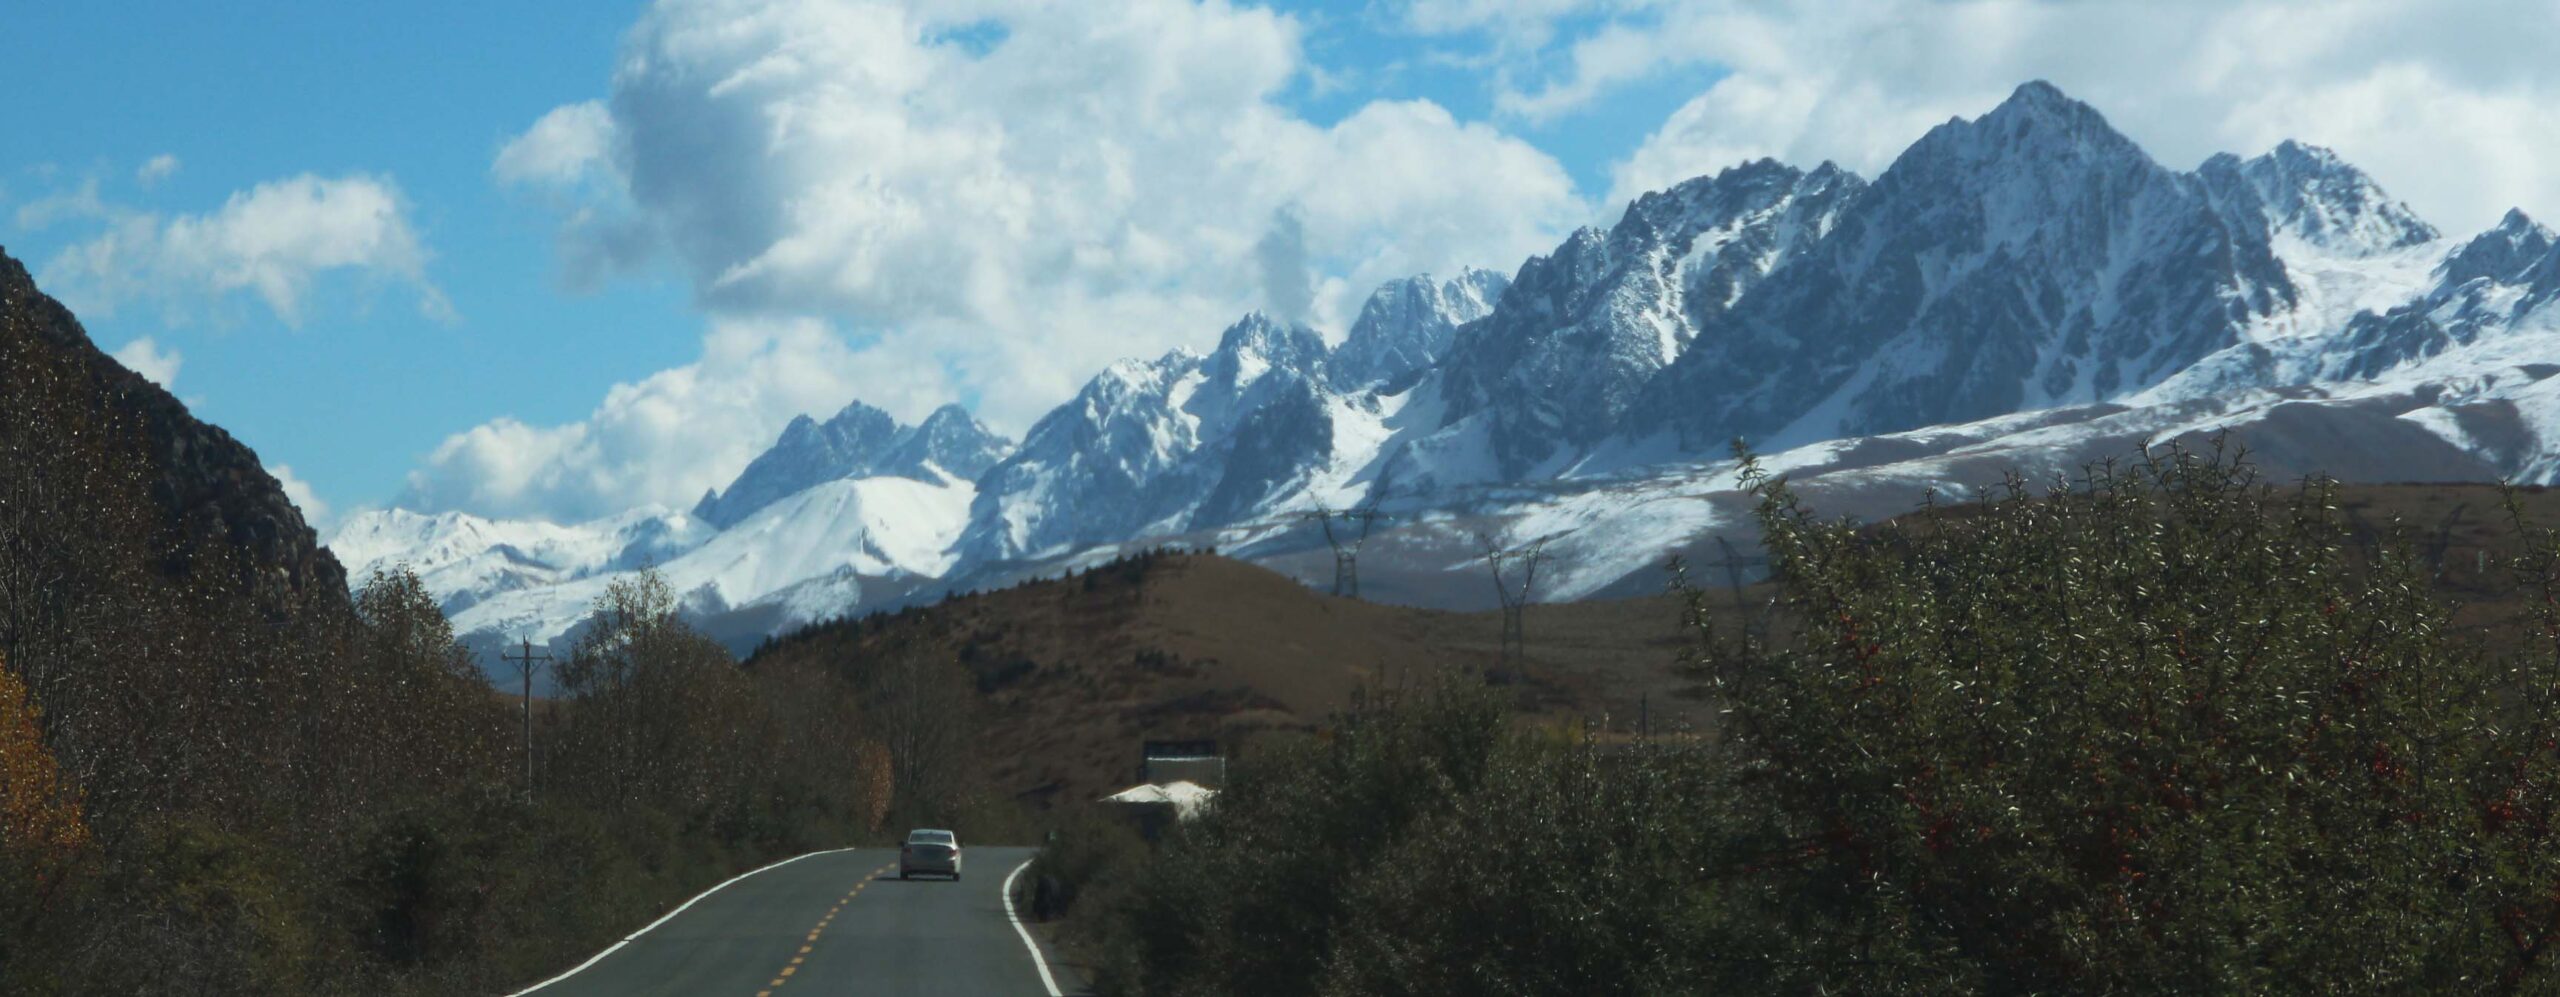 Rongbacha Mountains of Shaluli